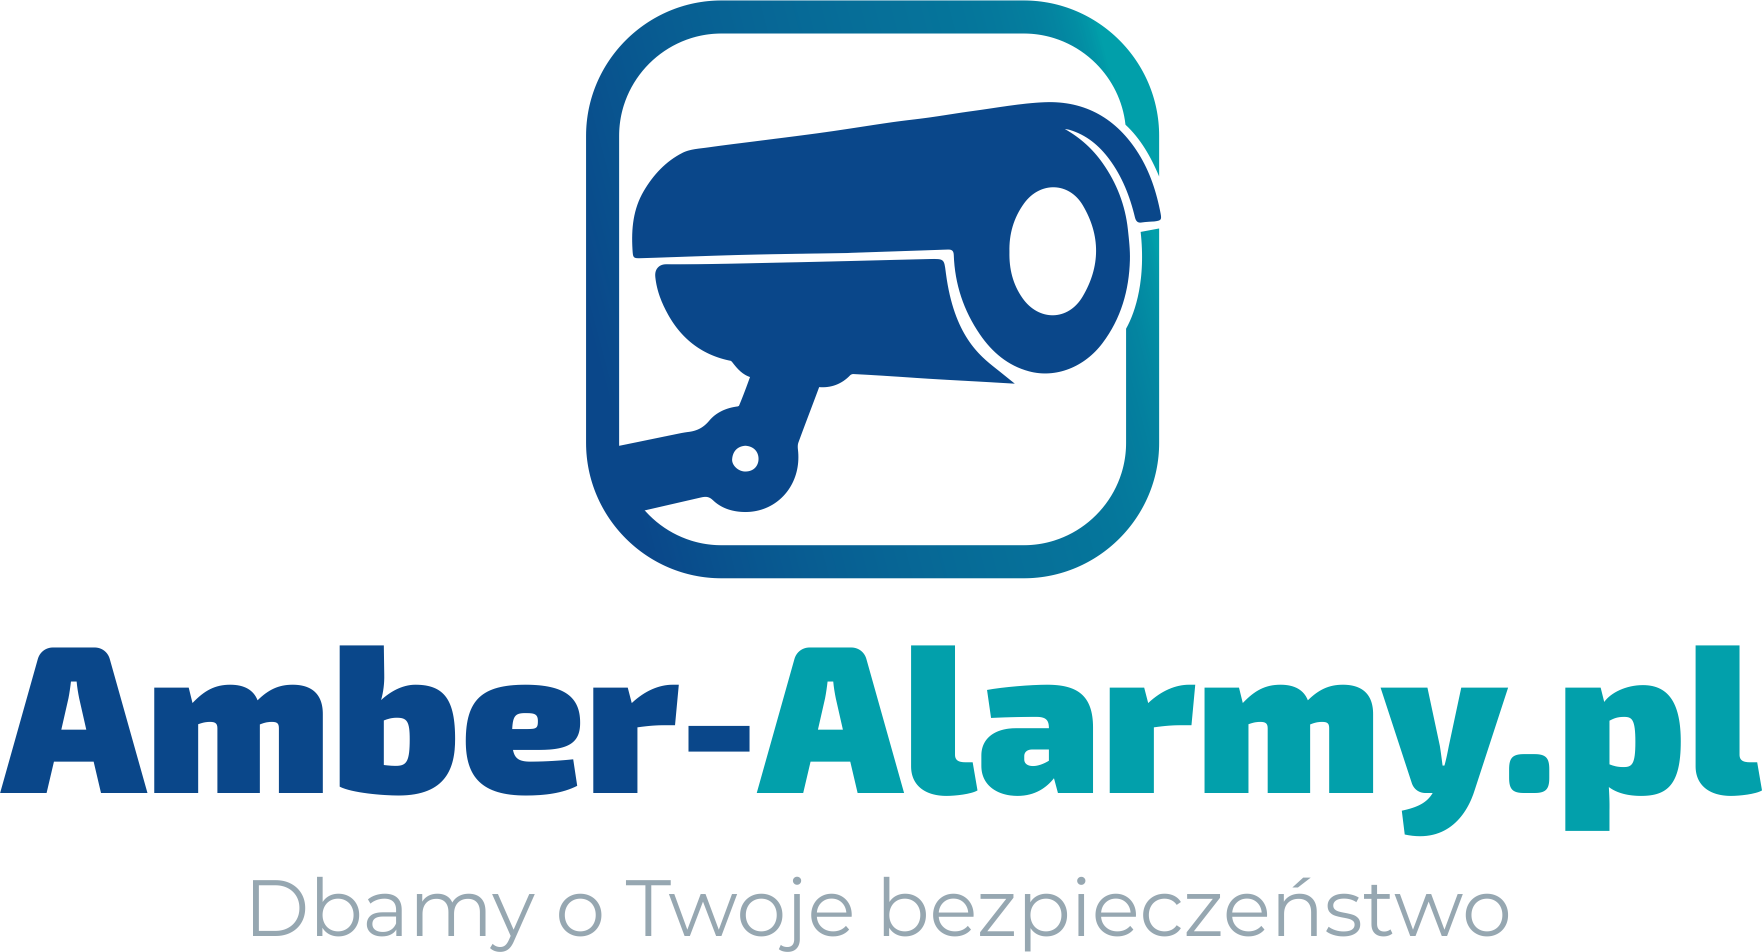 amber-alarmy.pl